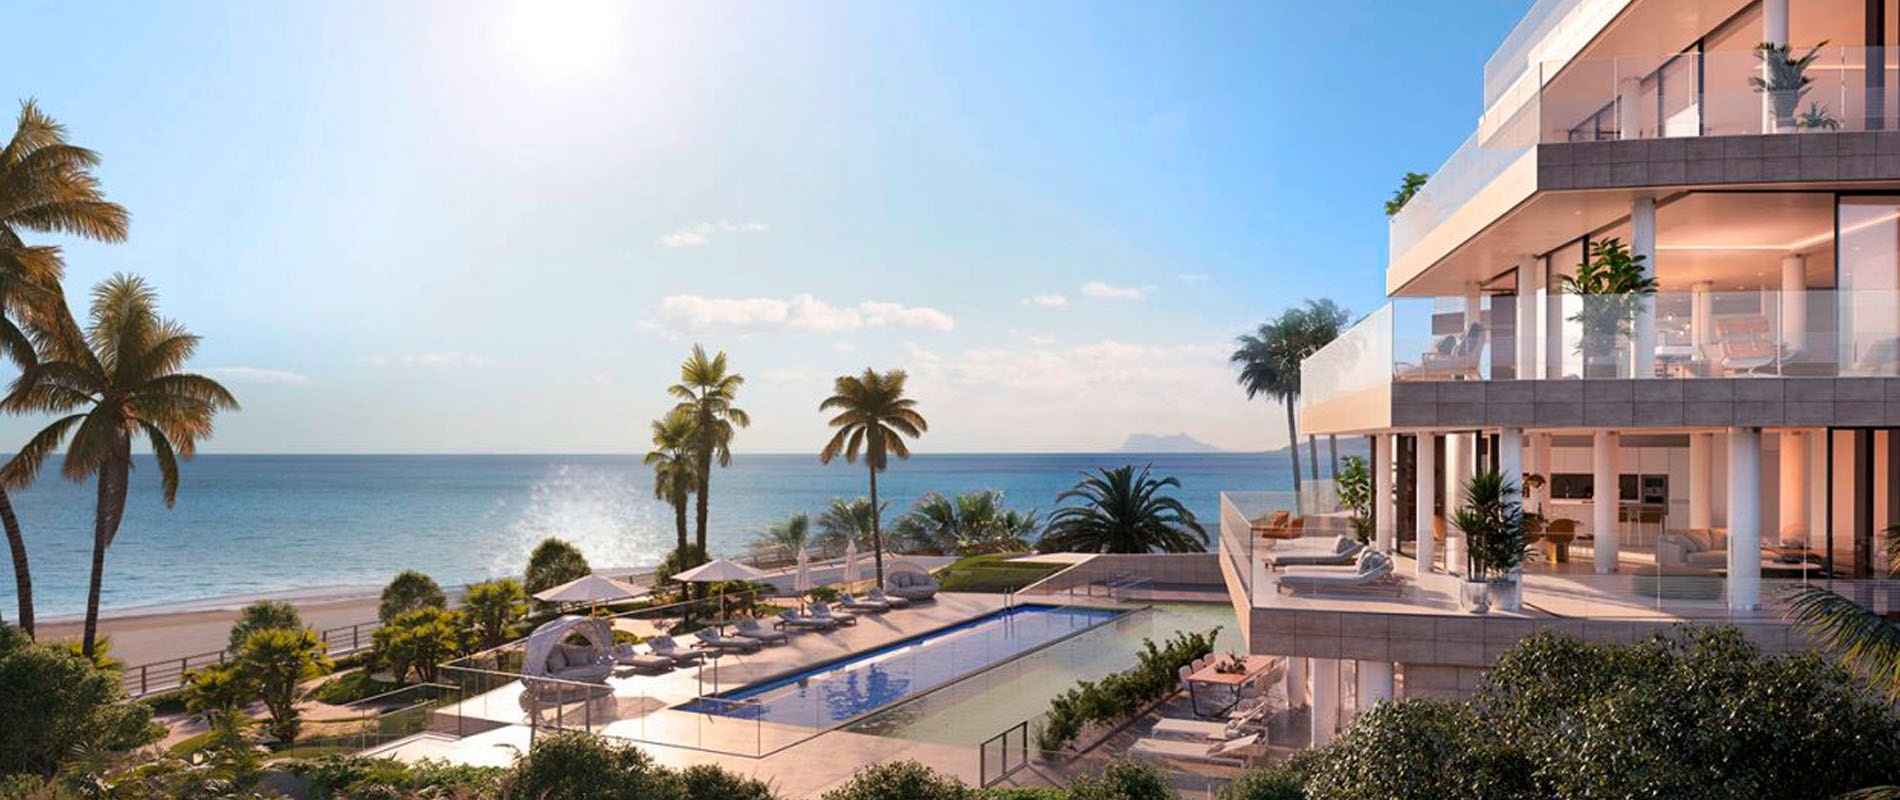 Properties for Sale Marbella and Puerto Banus